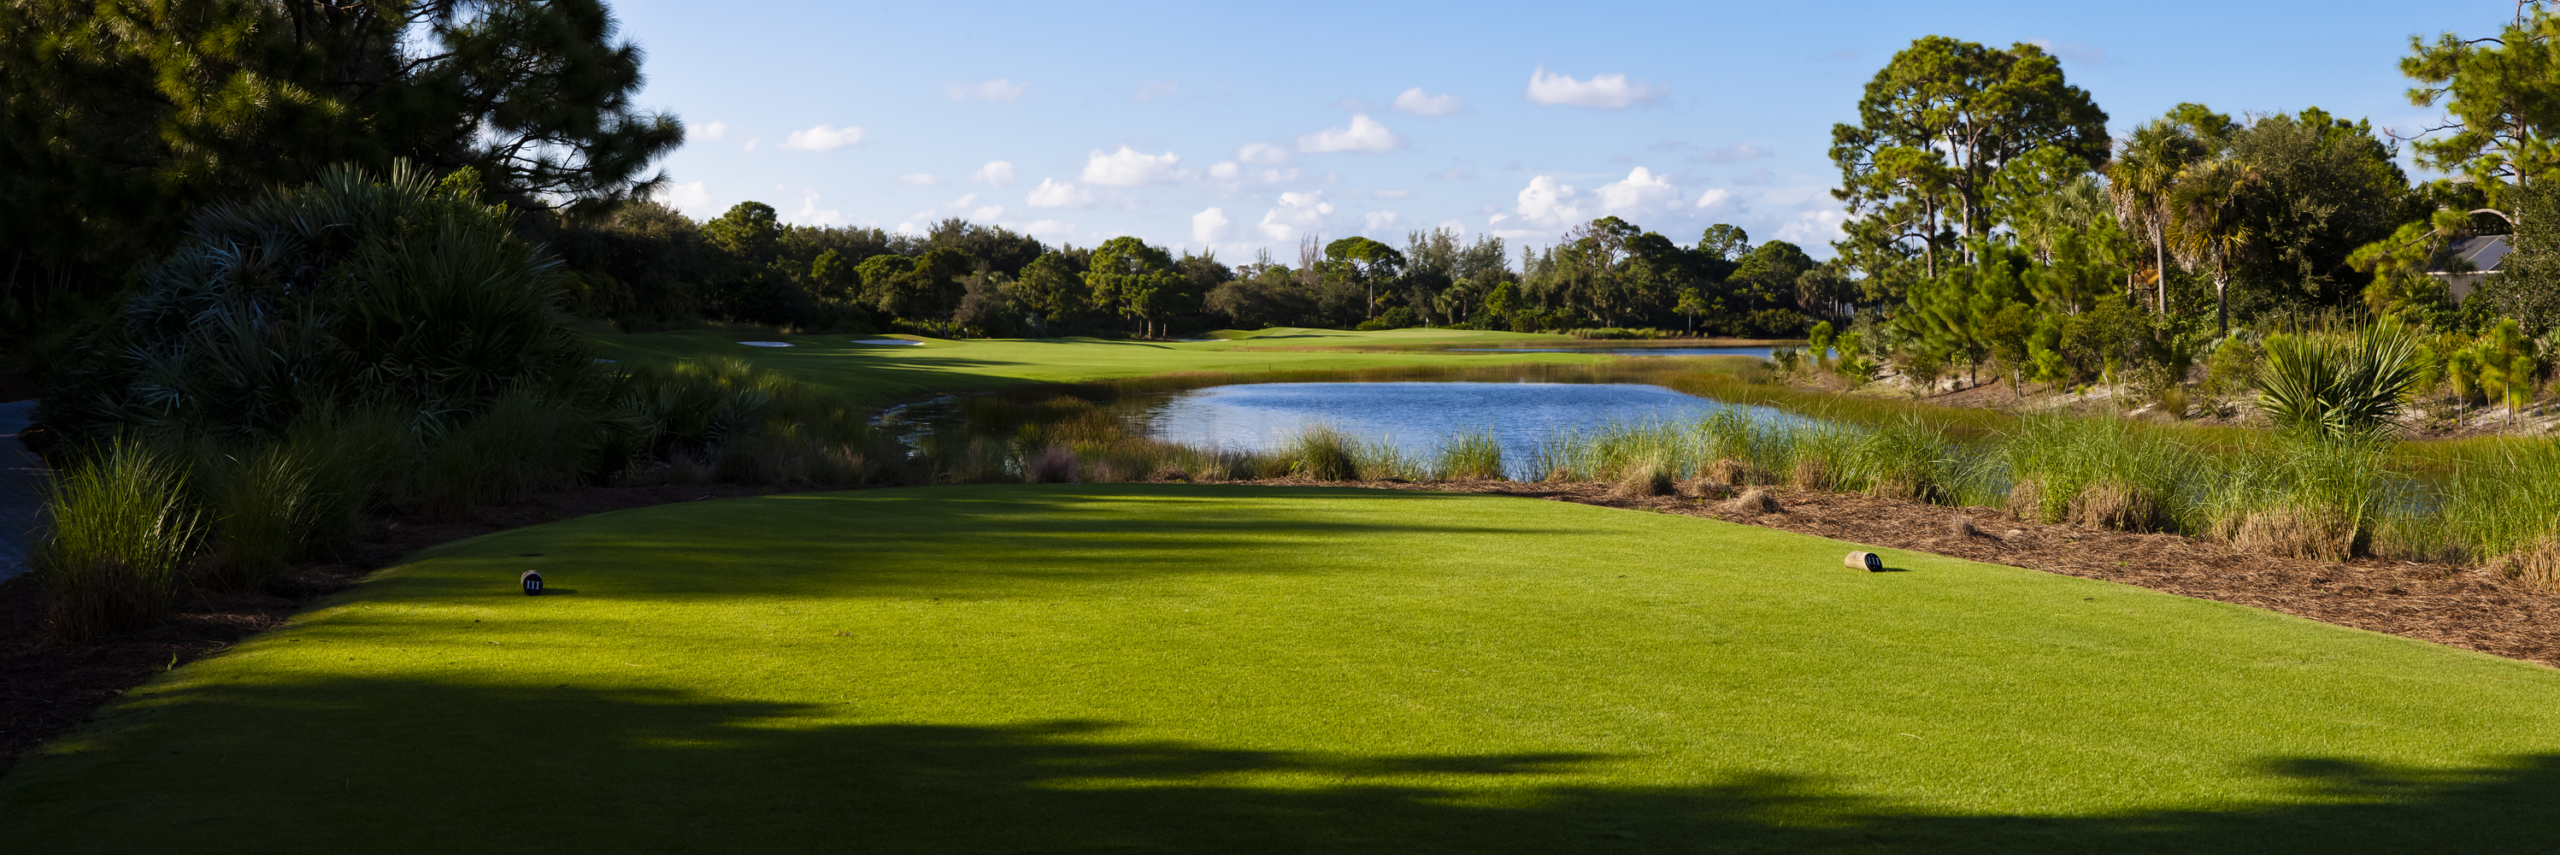 Southwest Florida Golf Course Communities